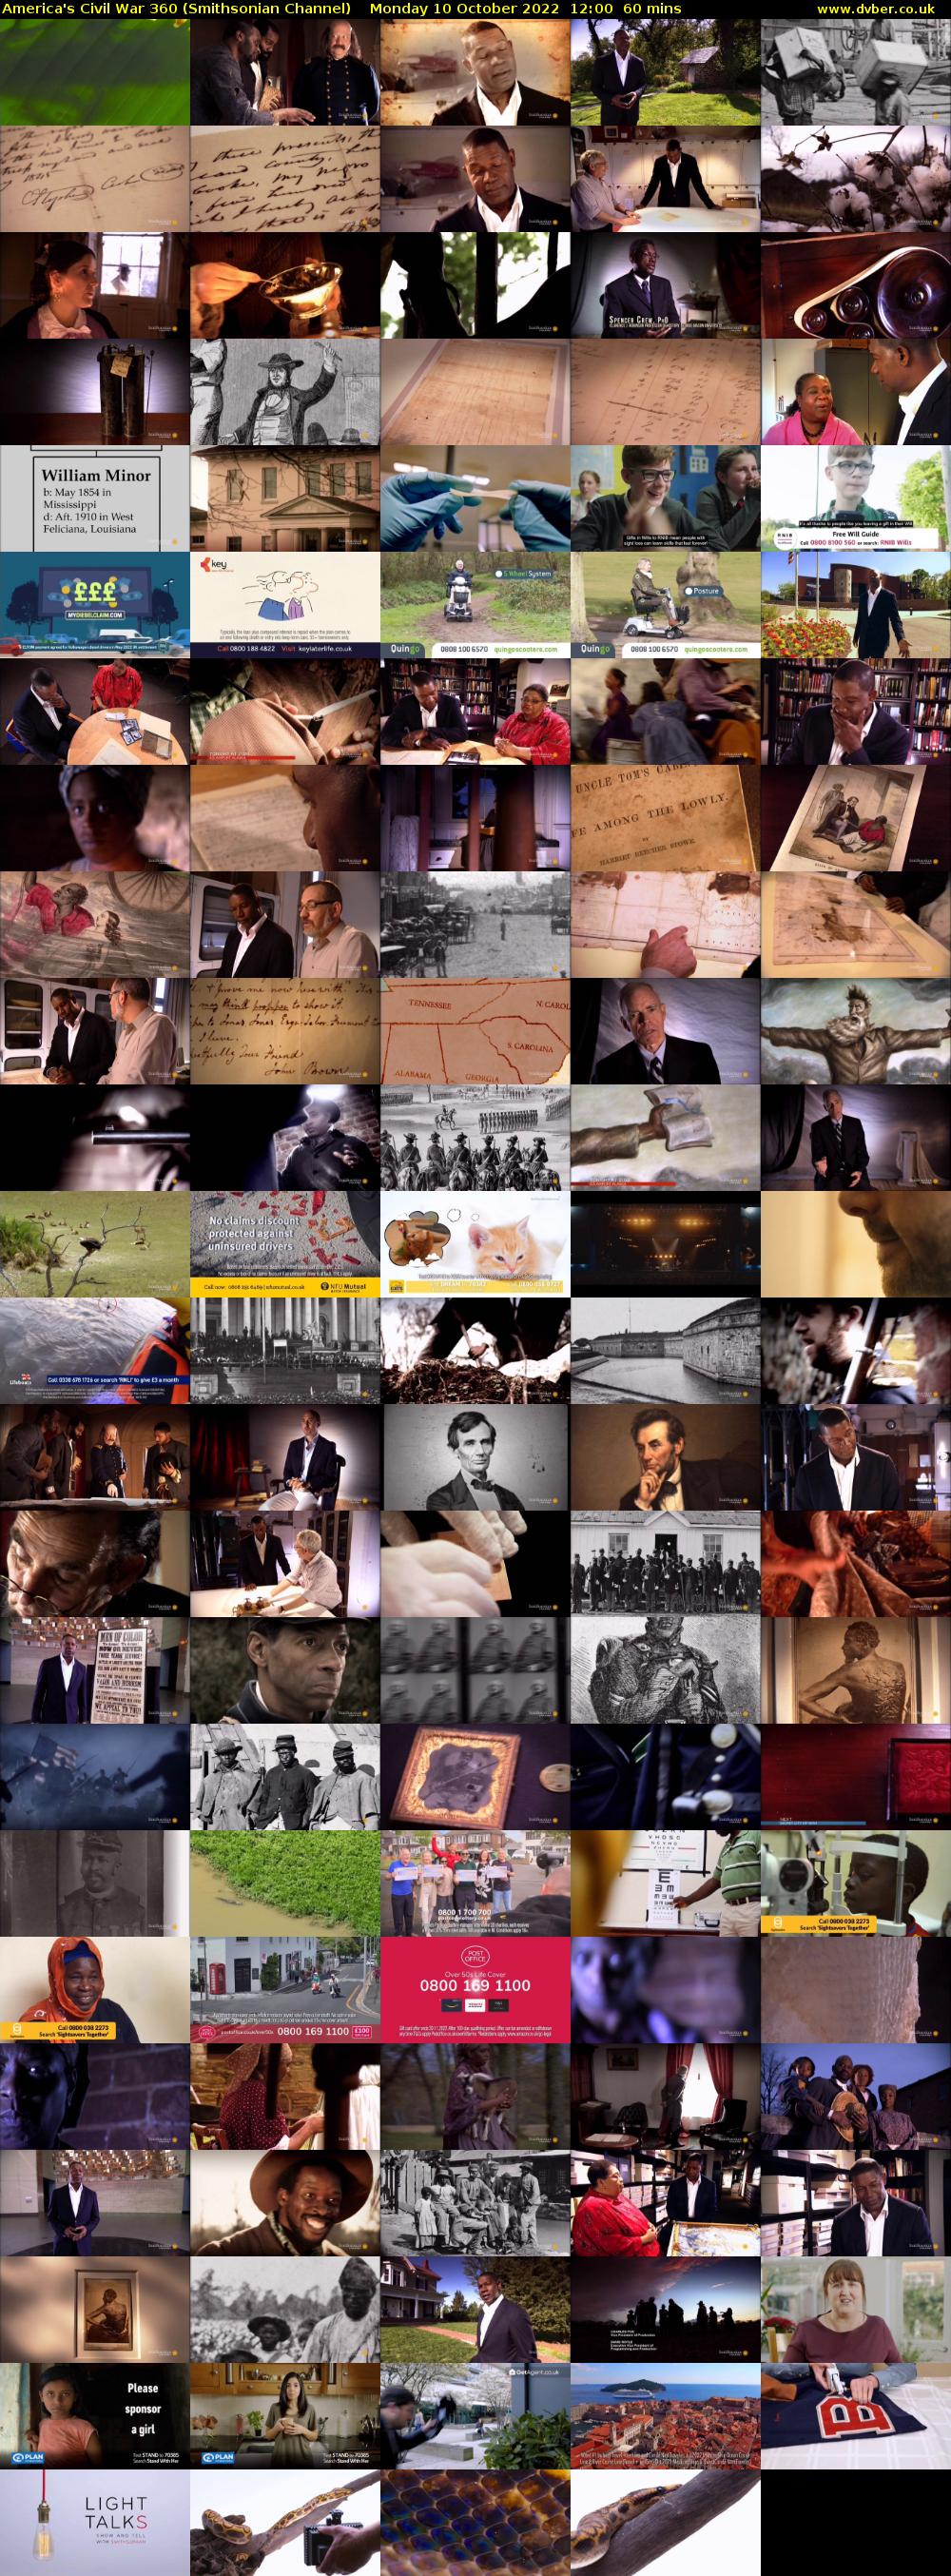 America's Civil War 360 (Smithsonian Channel) Monday 10 October 2022 12:00 - 13:00